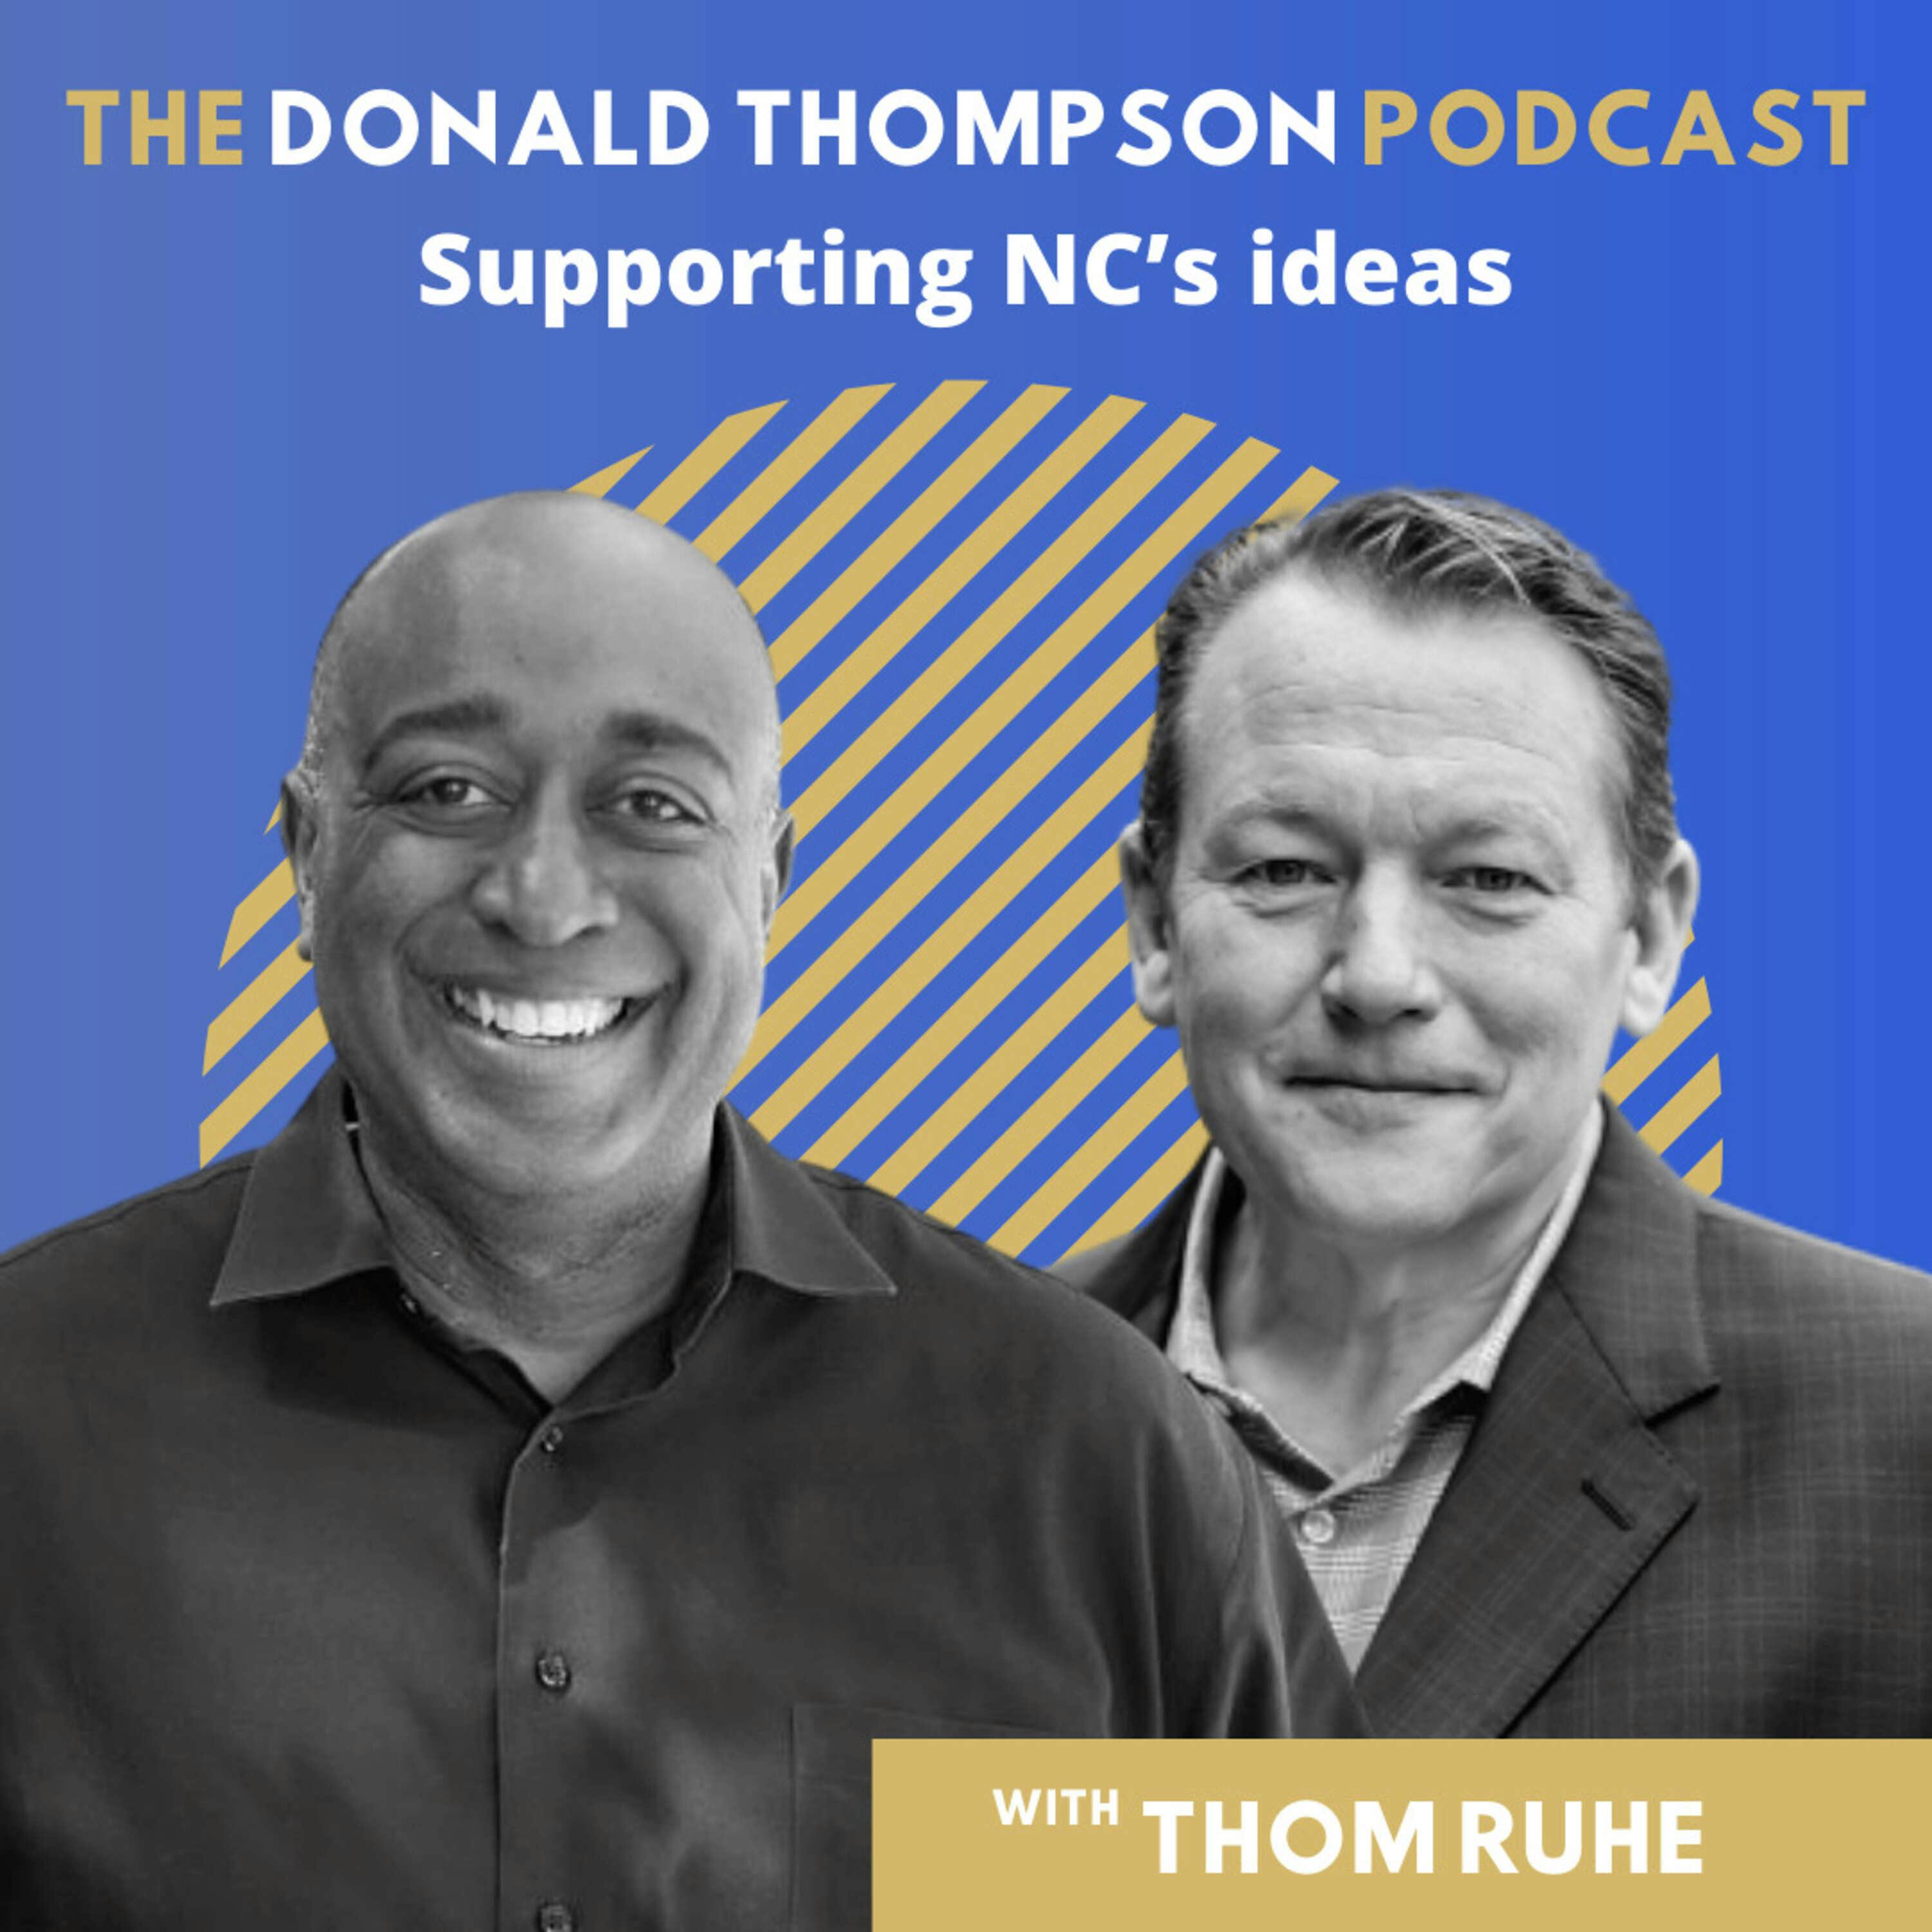 NC IDEA’s Economic Support & The Black Entrepreneurship Council - CEO Thom Ruhe